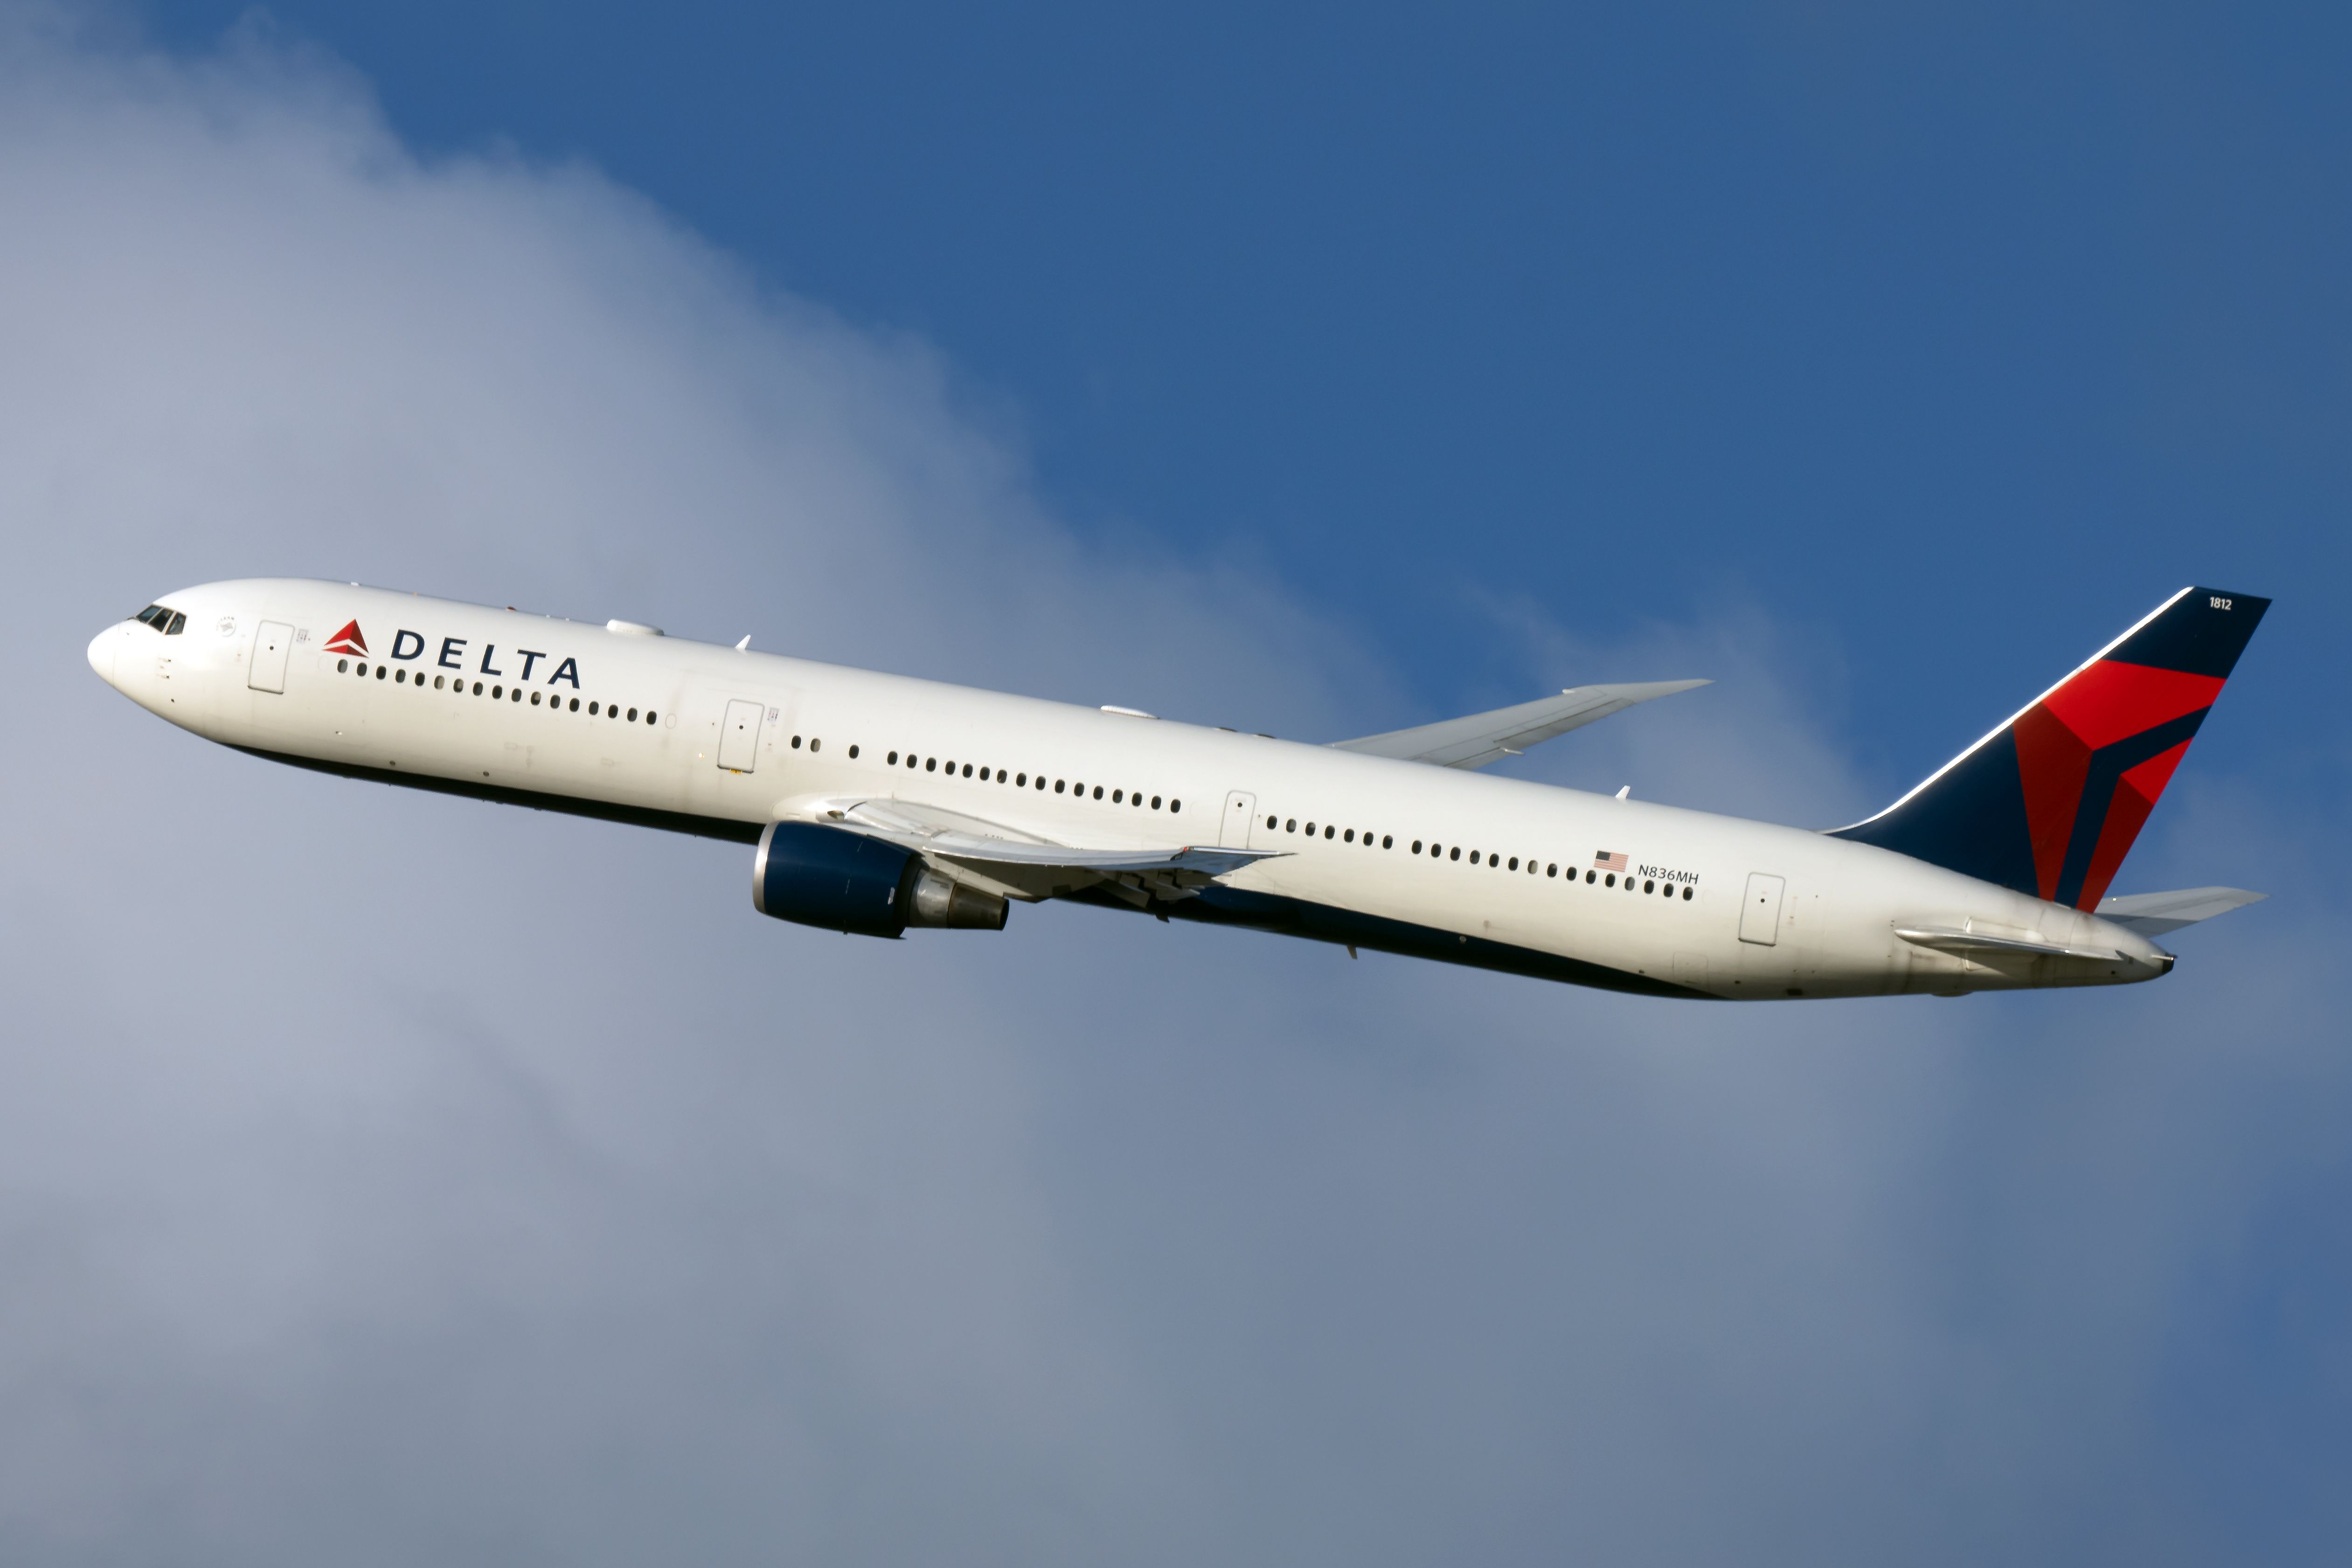 Delta Air Lines Suspends Its Aeroflot Codeshare Over Ukraine Invasion